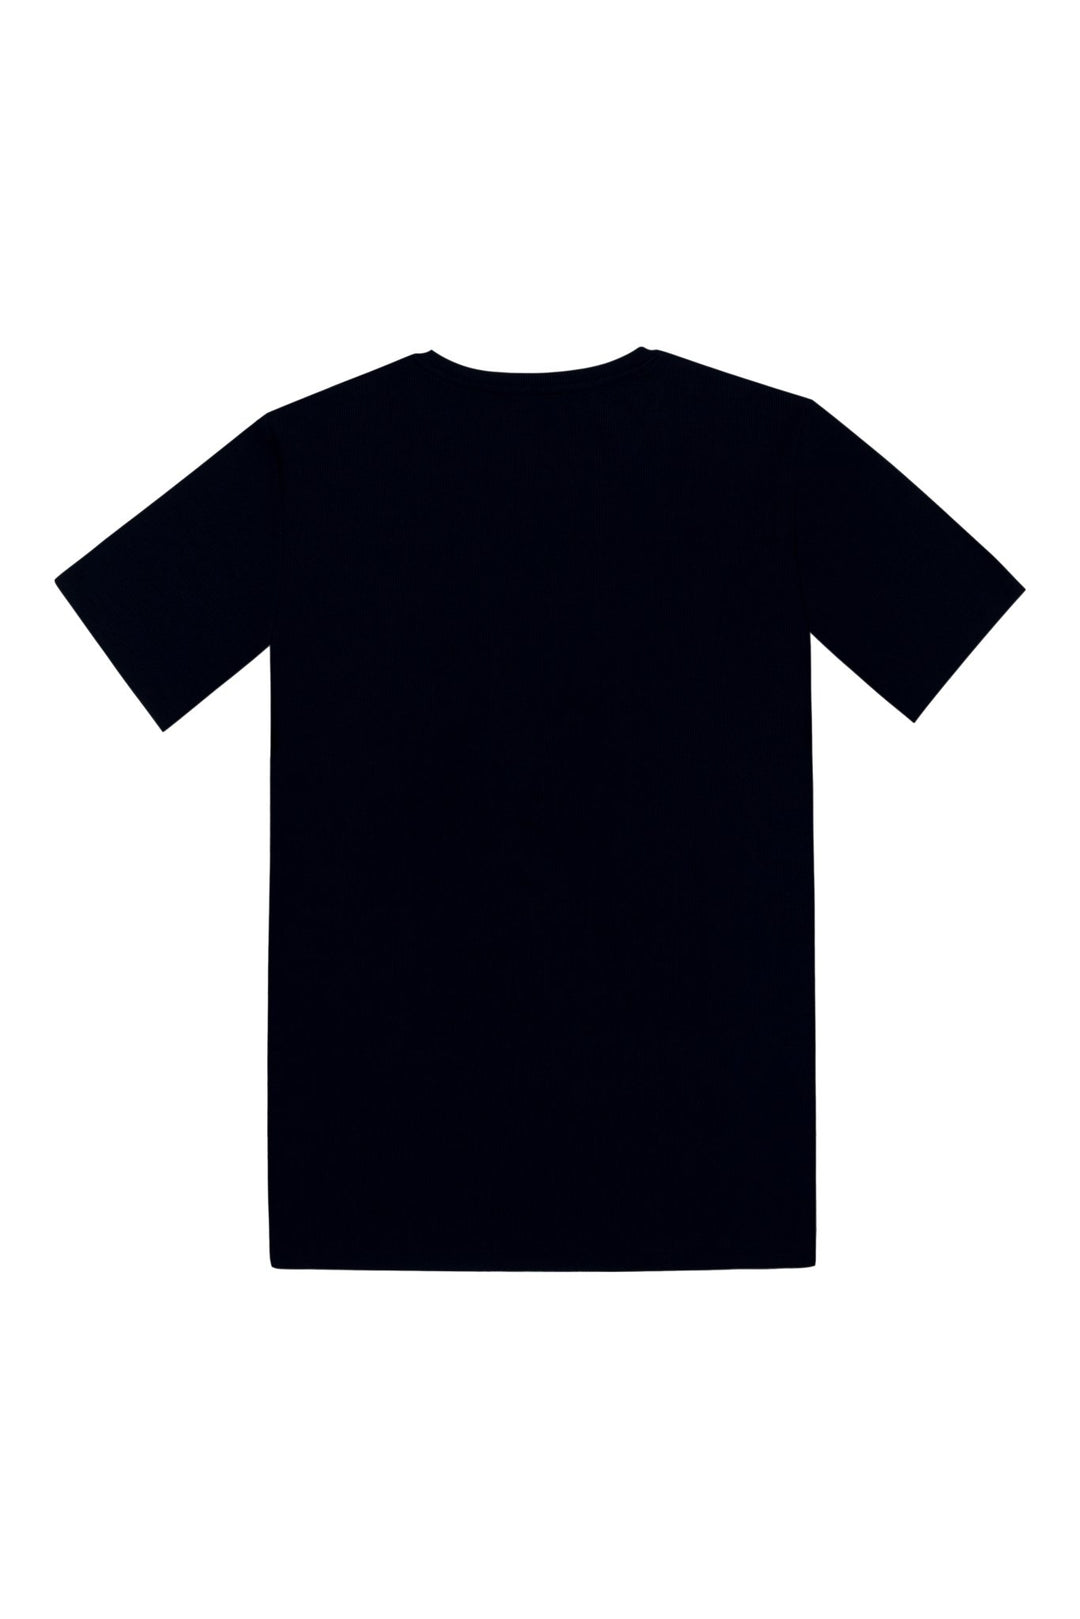 Men's Personalised Jersey Bamboo Lounge T-Shirt - Black